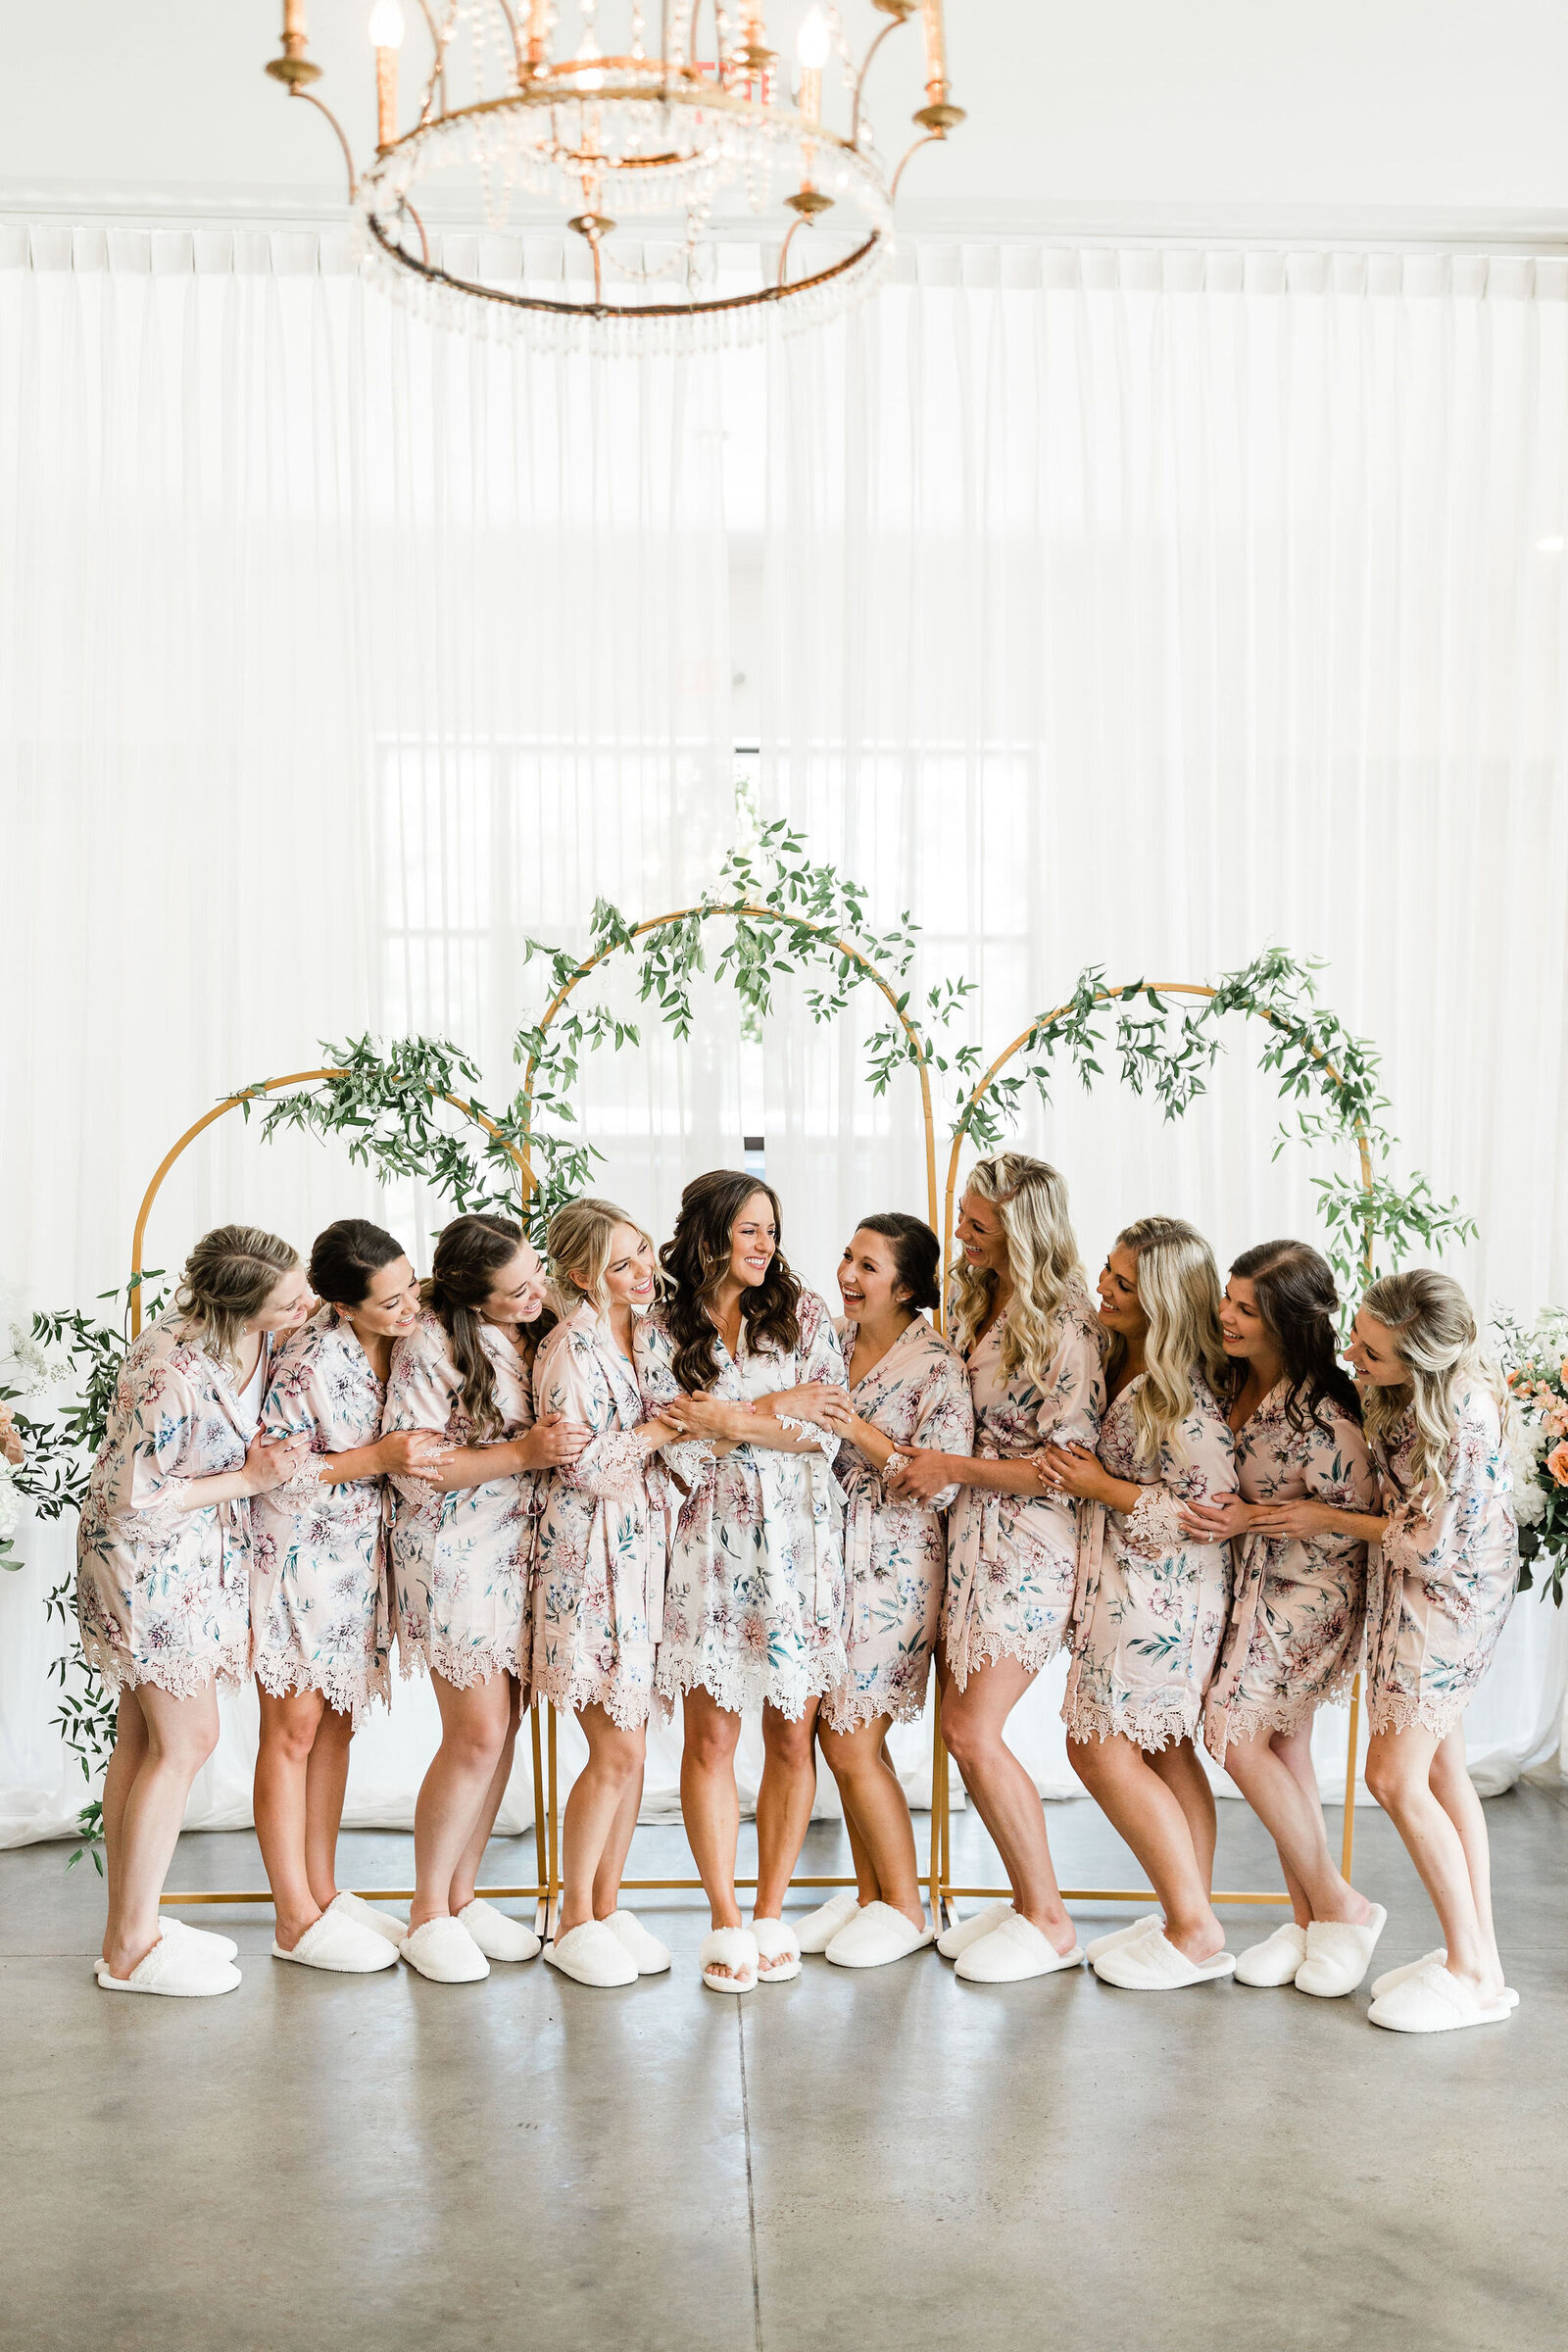 Indoor Bridesmaids Photos | Wrightsville Manor, Wrightsville Beach NC | The Axtells Photo and Film